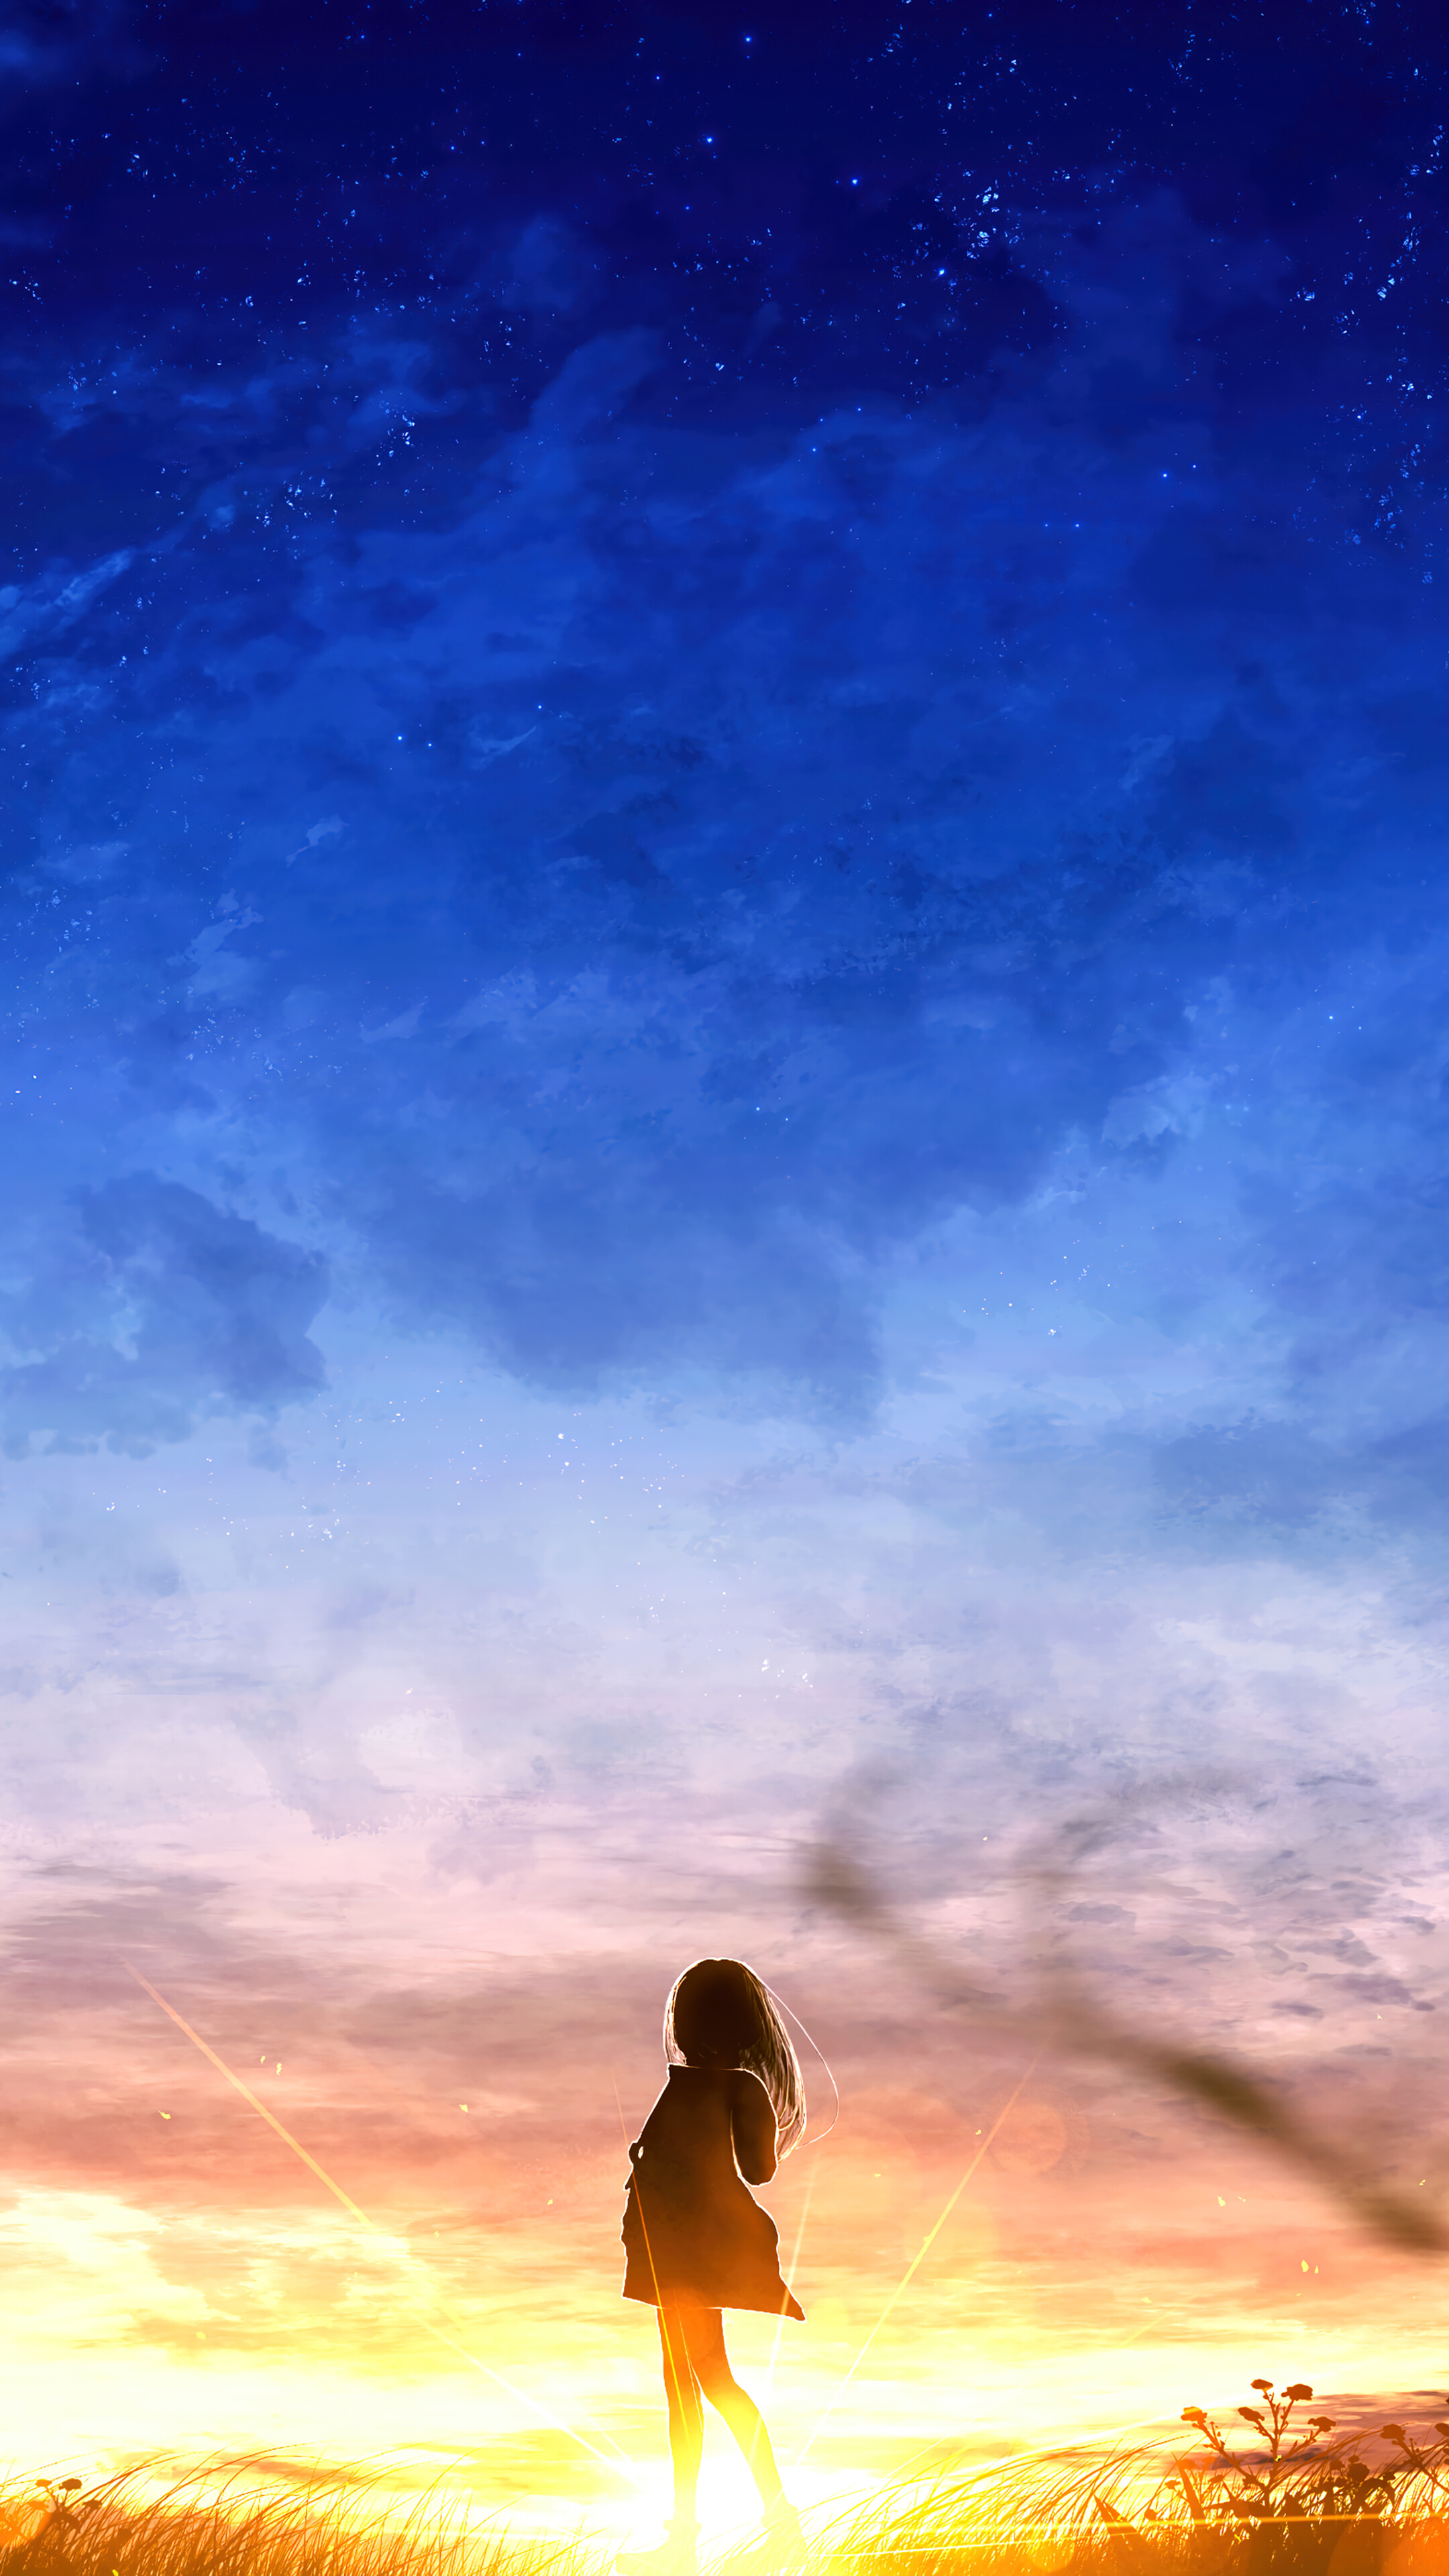 Sunset Sceney Anime Art Wallpaper 4k Pc Desktop 634a